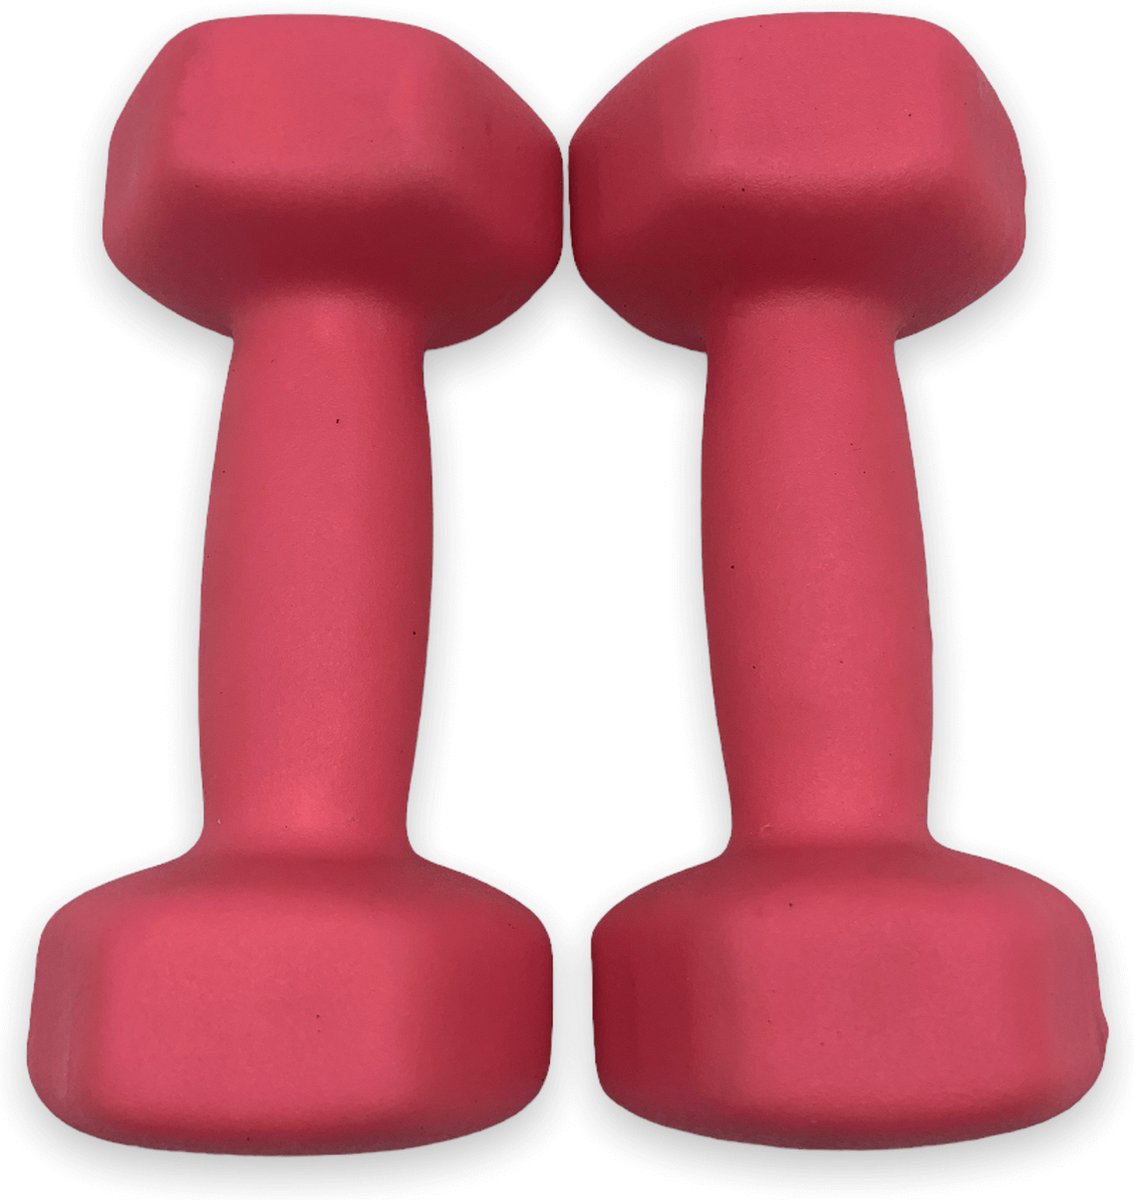 Dumbell - Neopreen 1,5 kg - dumbellset - 2 x 1,5 kg - roze - fitness gewicht - gewichten set 1,5 kg - gewichtjes 1,5 kg - fitness gewichten 1,5 kg